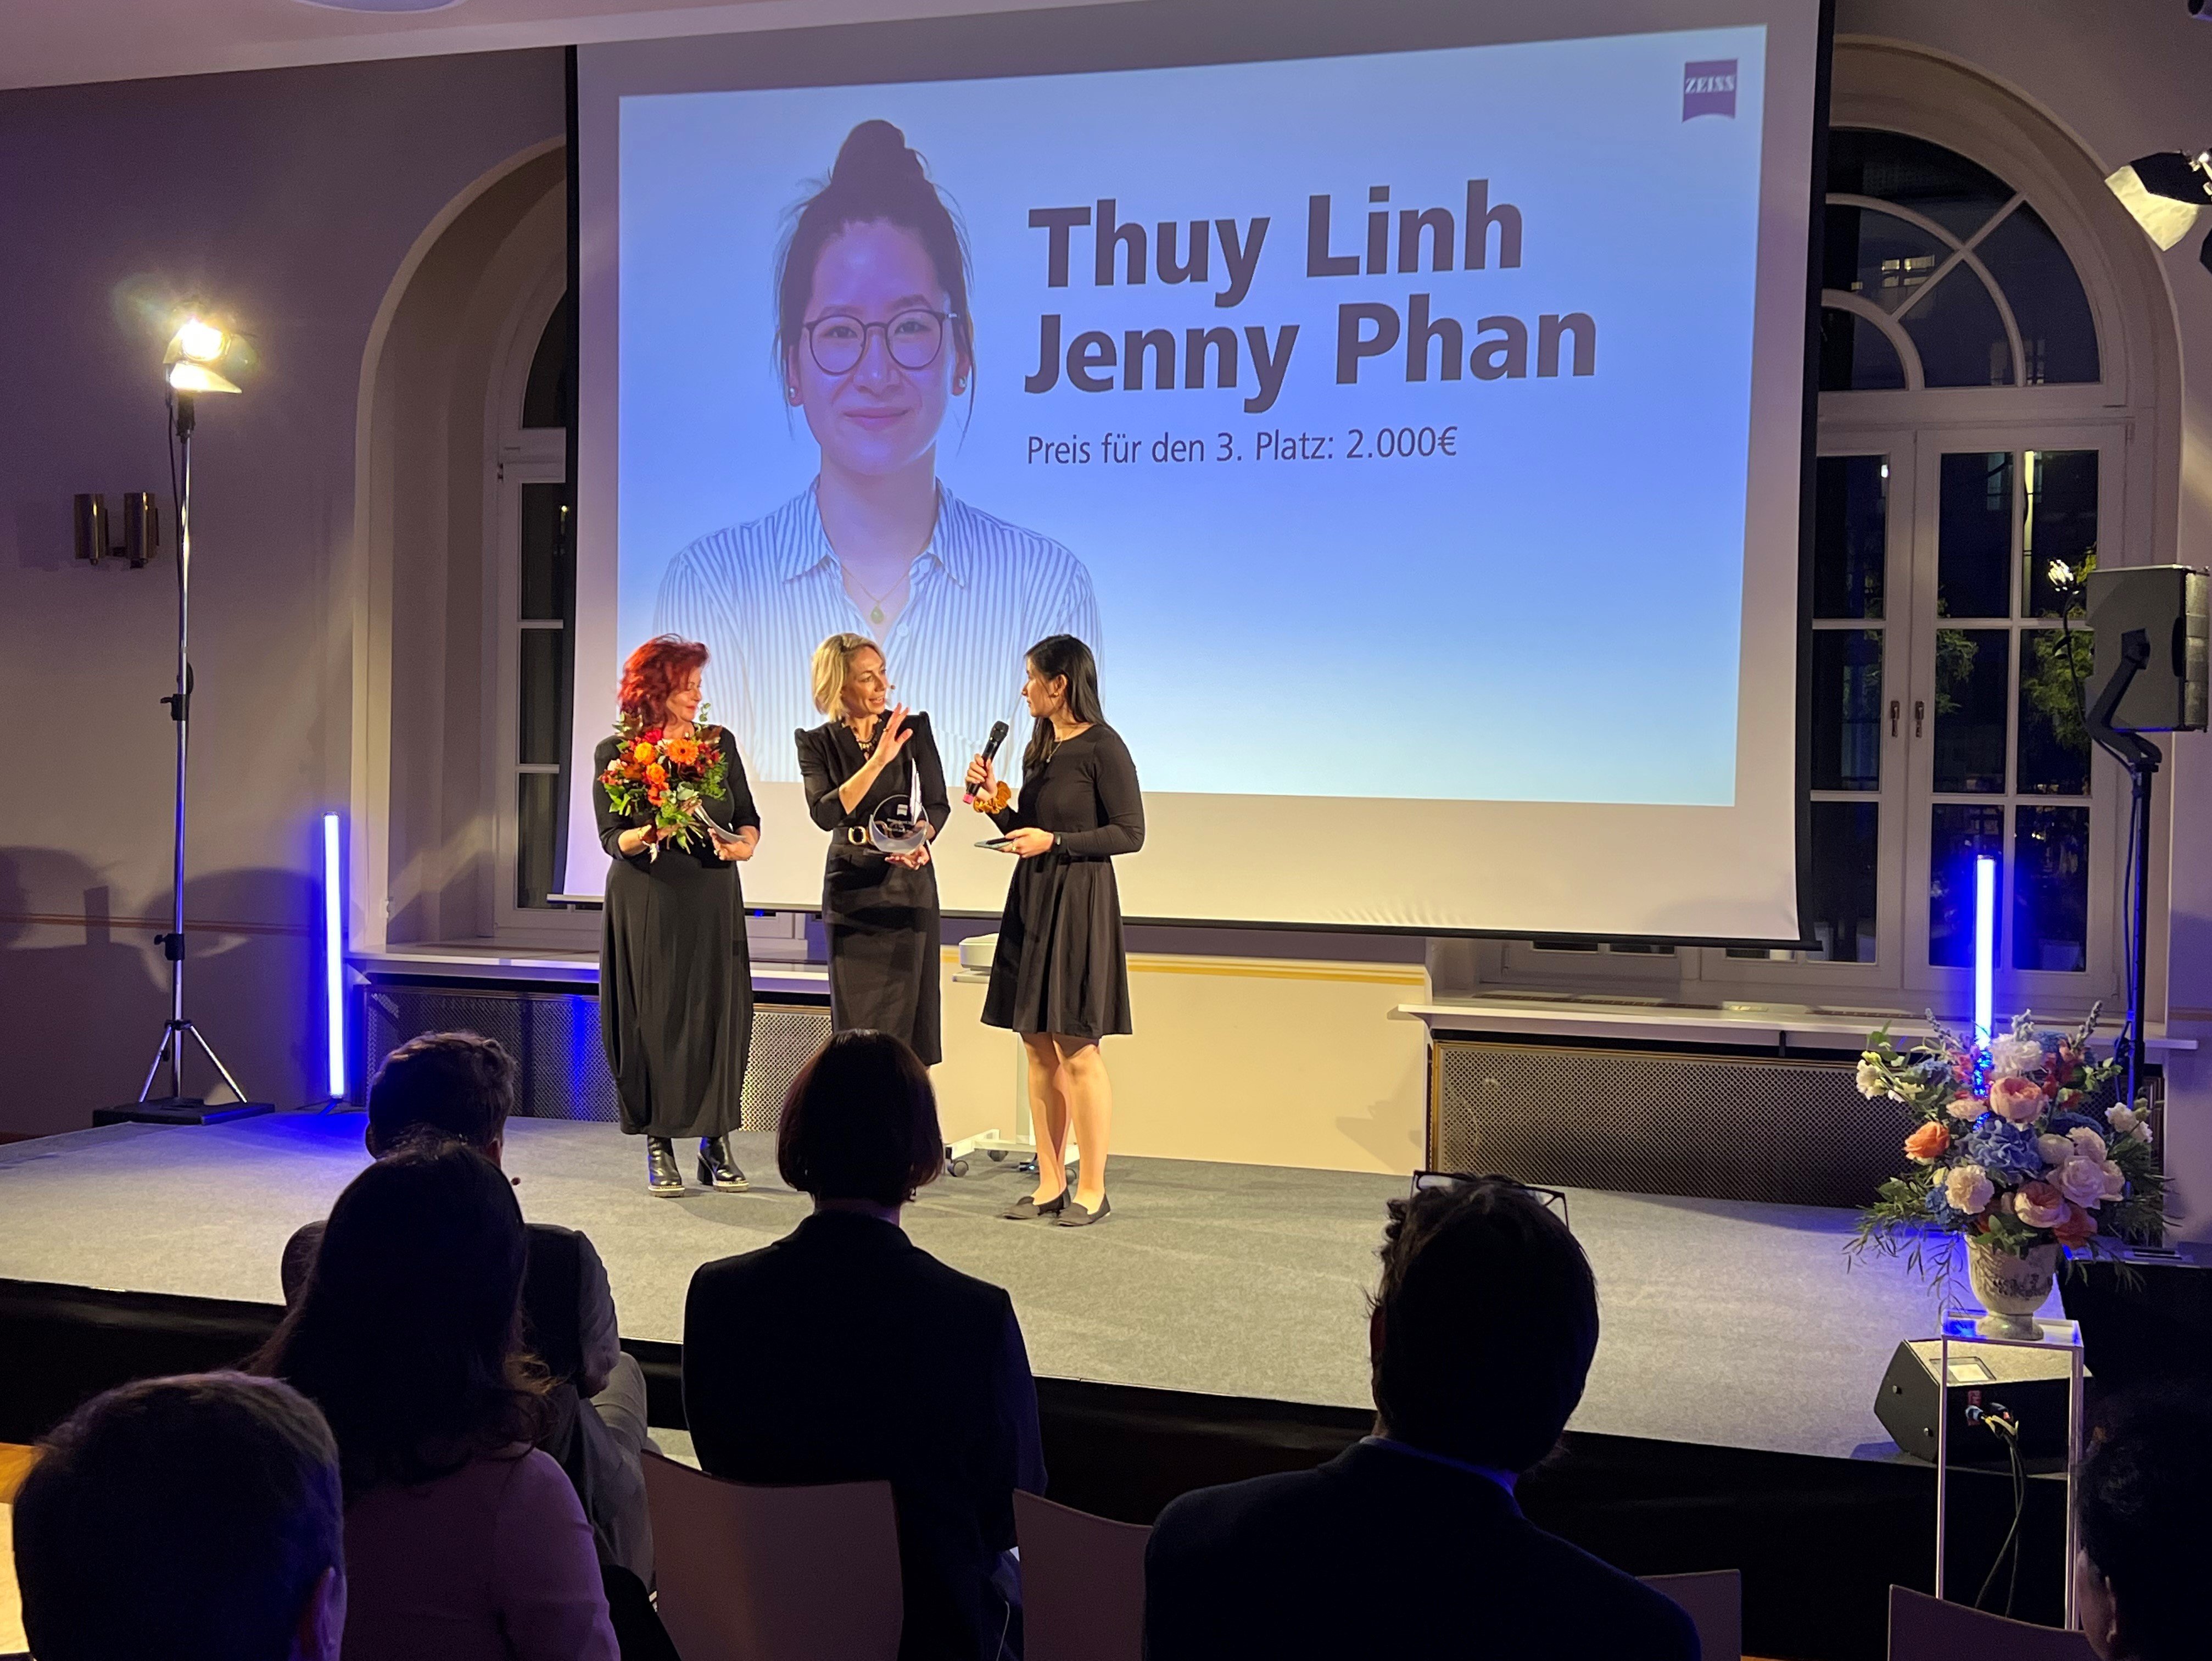 Übergabe des Preises an Thuy Linh Jenny Phan